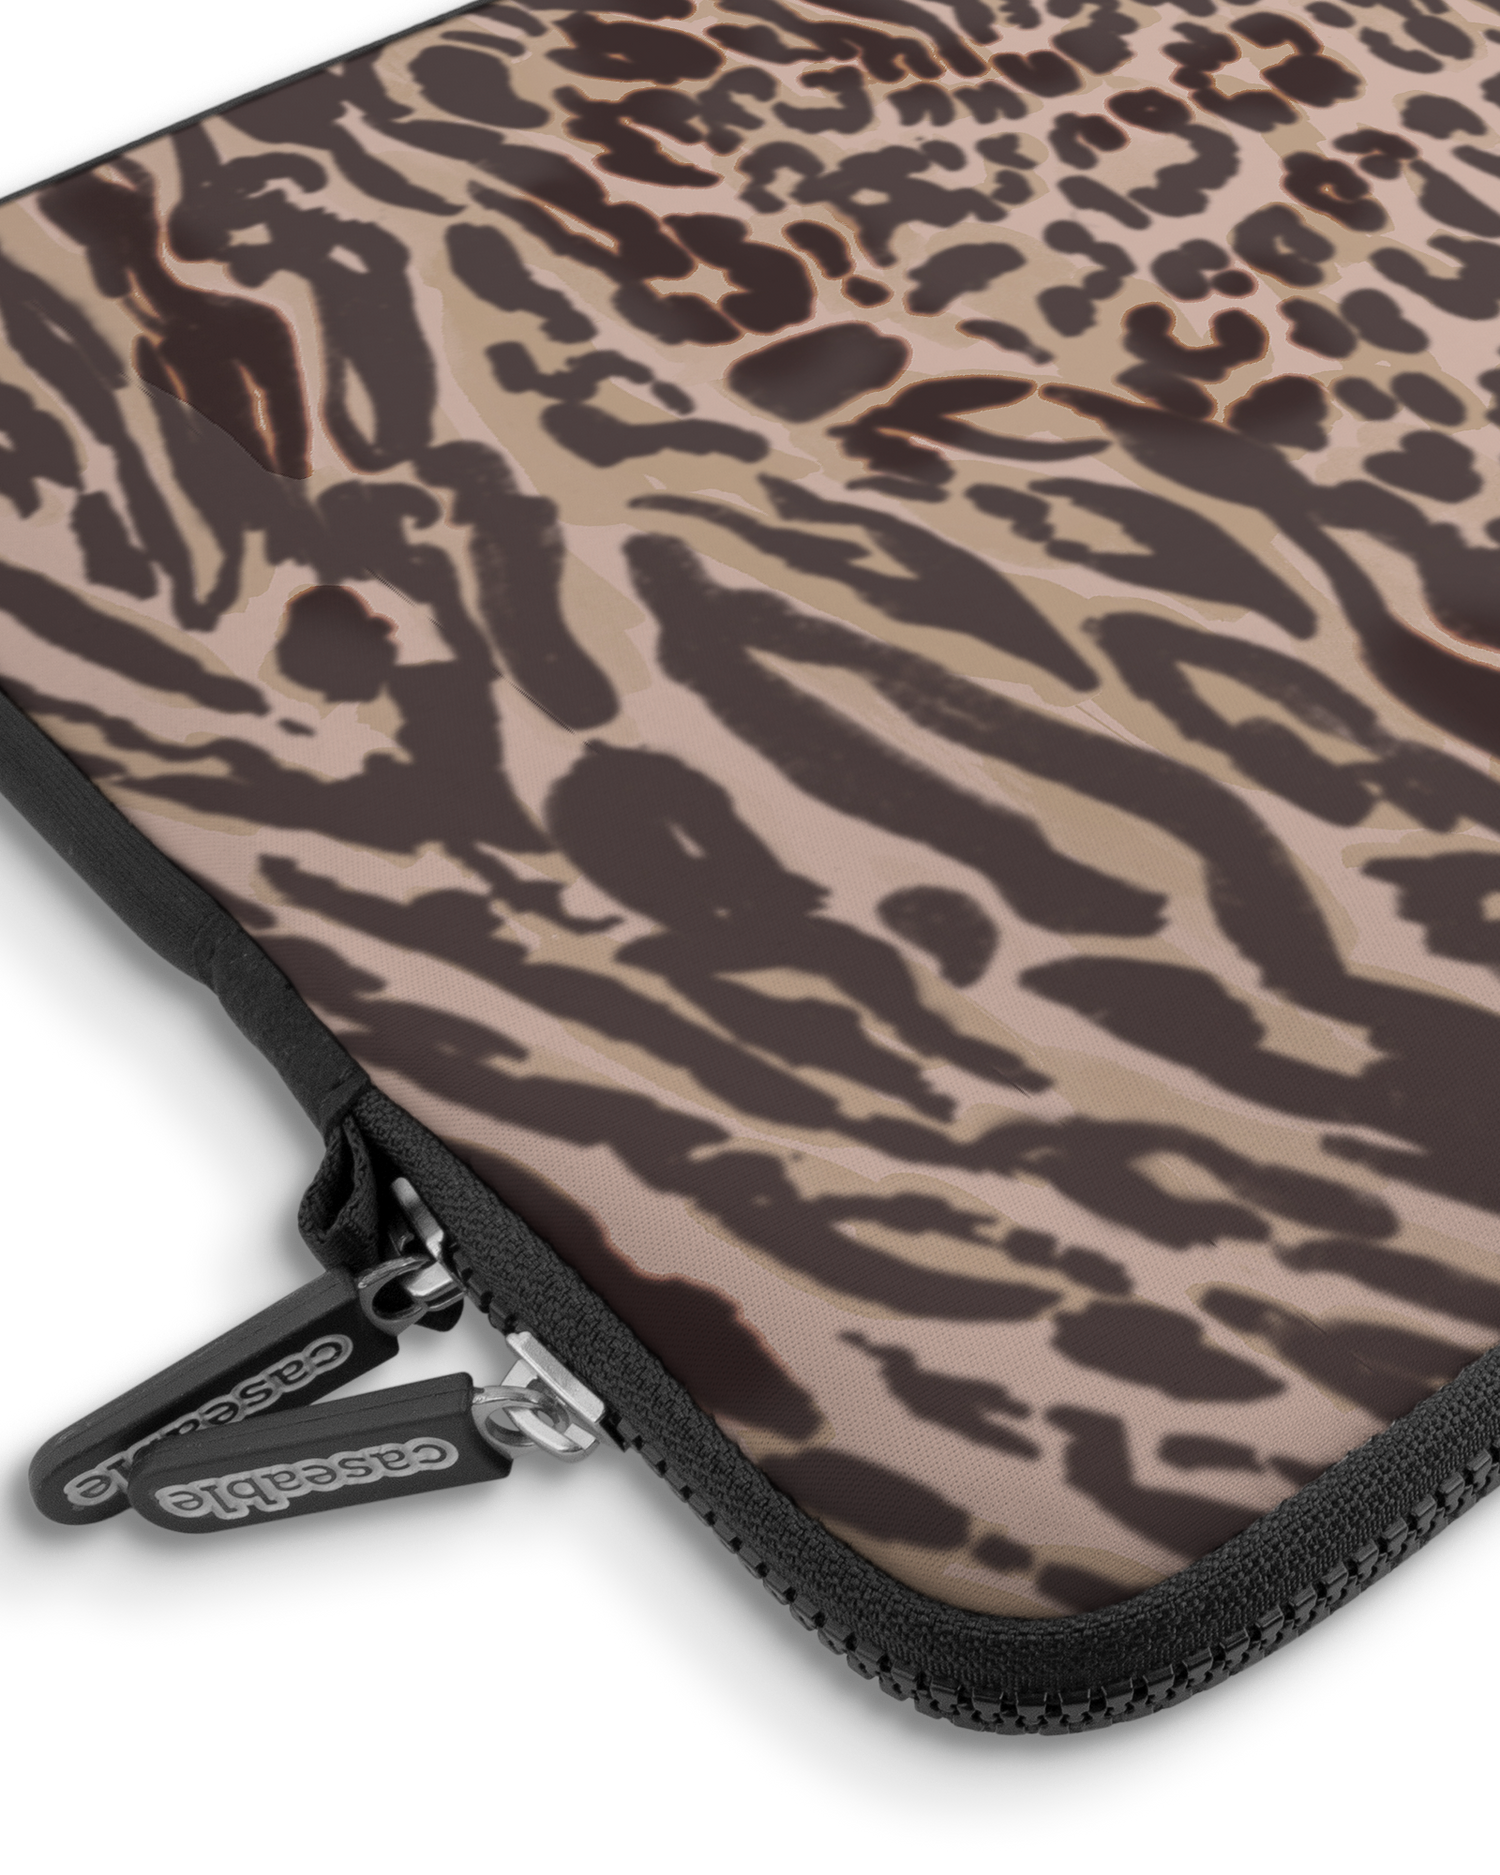 Animal Skin Tough Love Premium Laptop Bag 15 inch with device inside